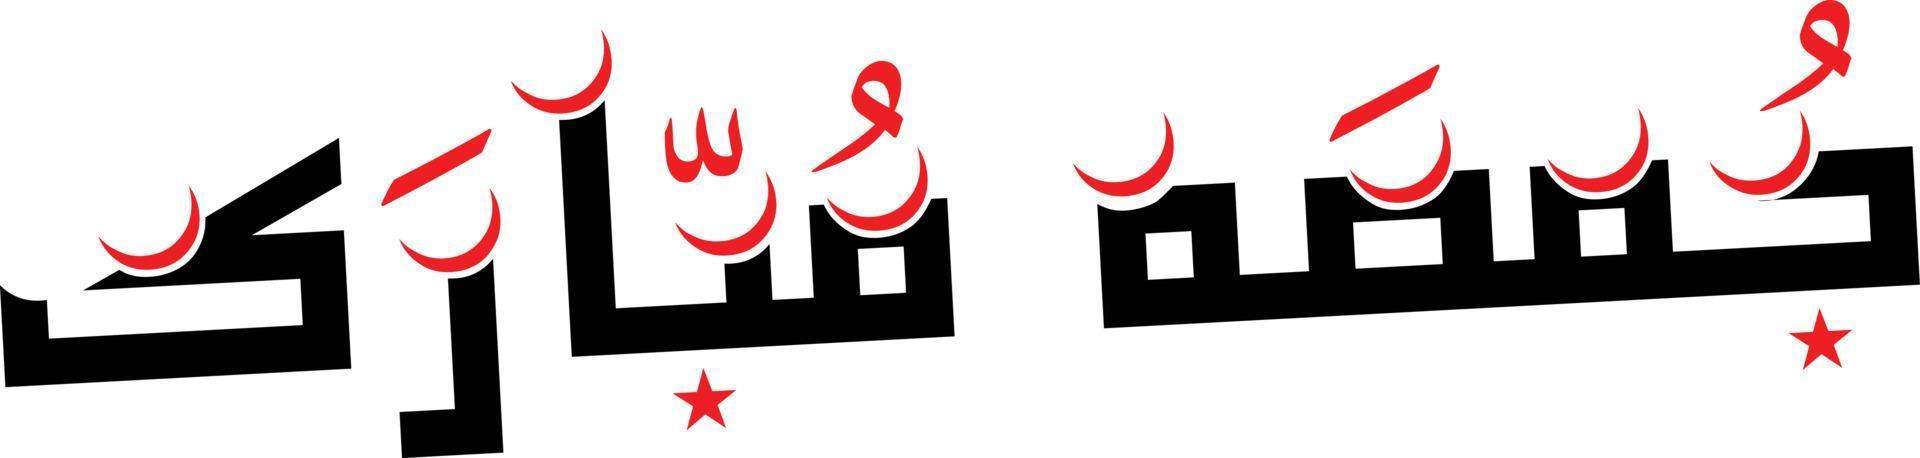 Jumma Mubarakh,Jumma Mubarakh png text urdu arabic calligraphy style,beautifull text of jumma mubarakh,new jumma mubarakh urdu arabic turkish calligraphy style vector